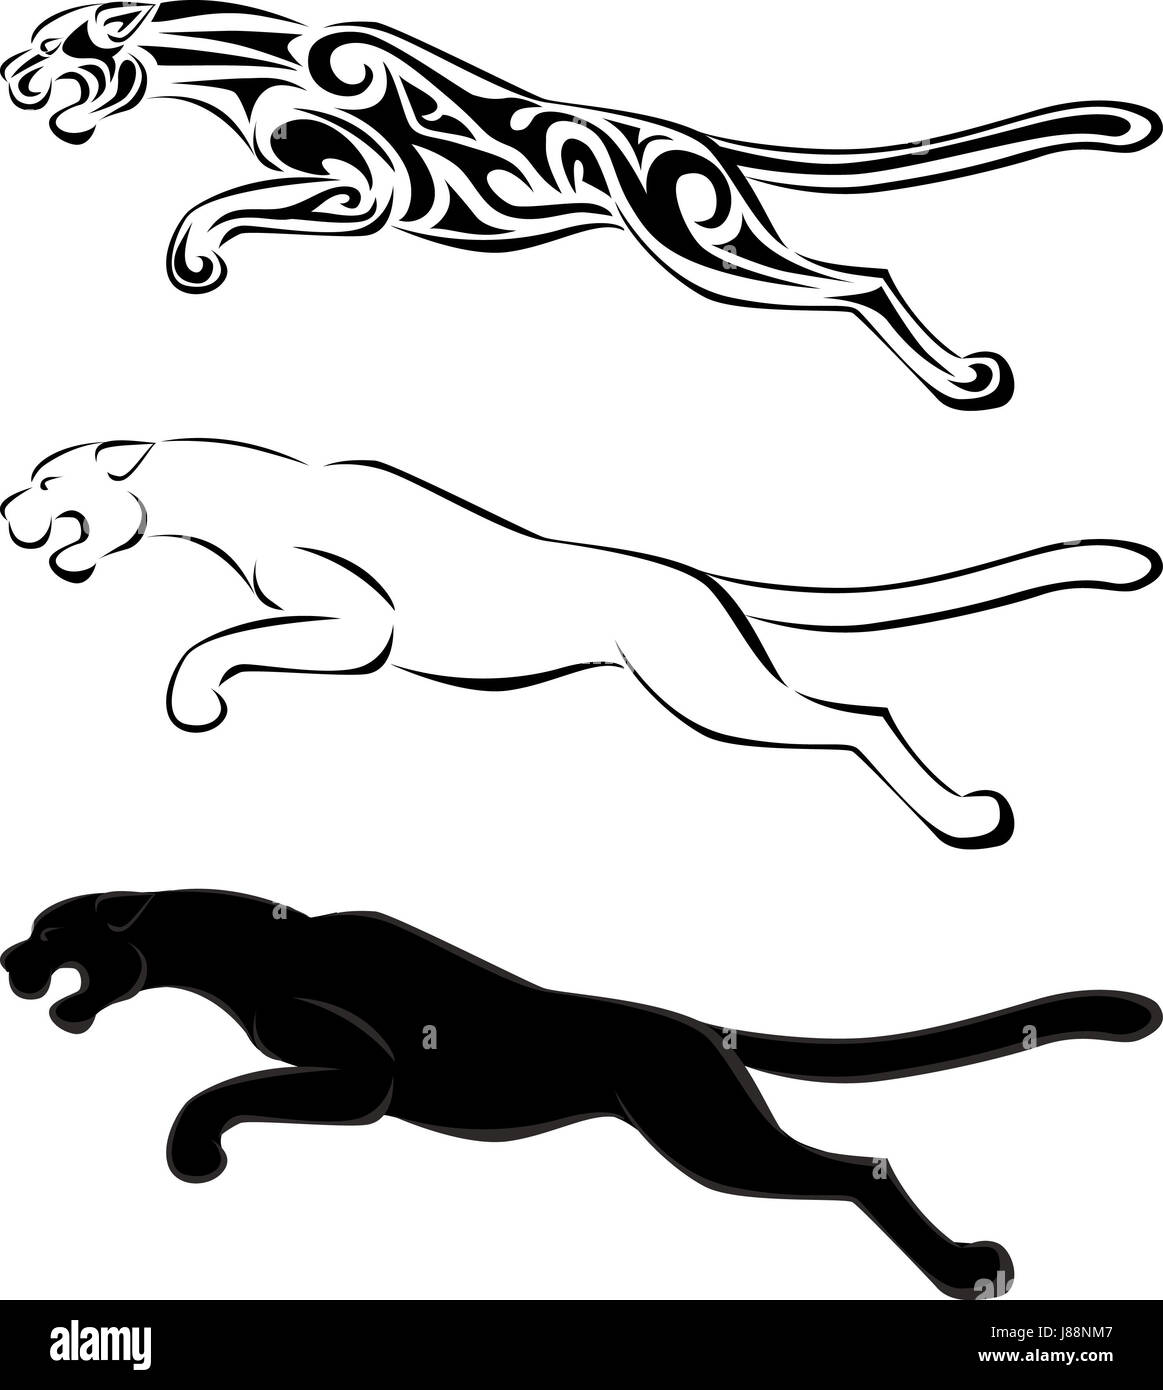 lion, cat, big cat, feline predator, tiger, silhouette, tattoo, pussycat  Stock Photo - Alamy